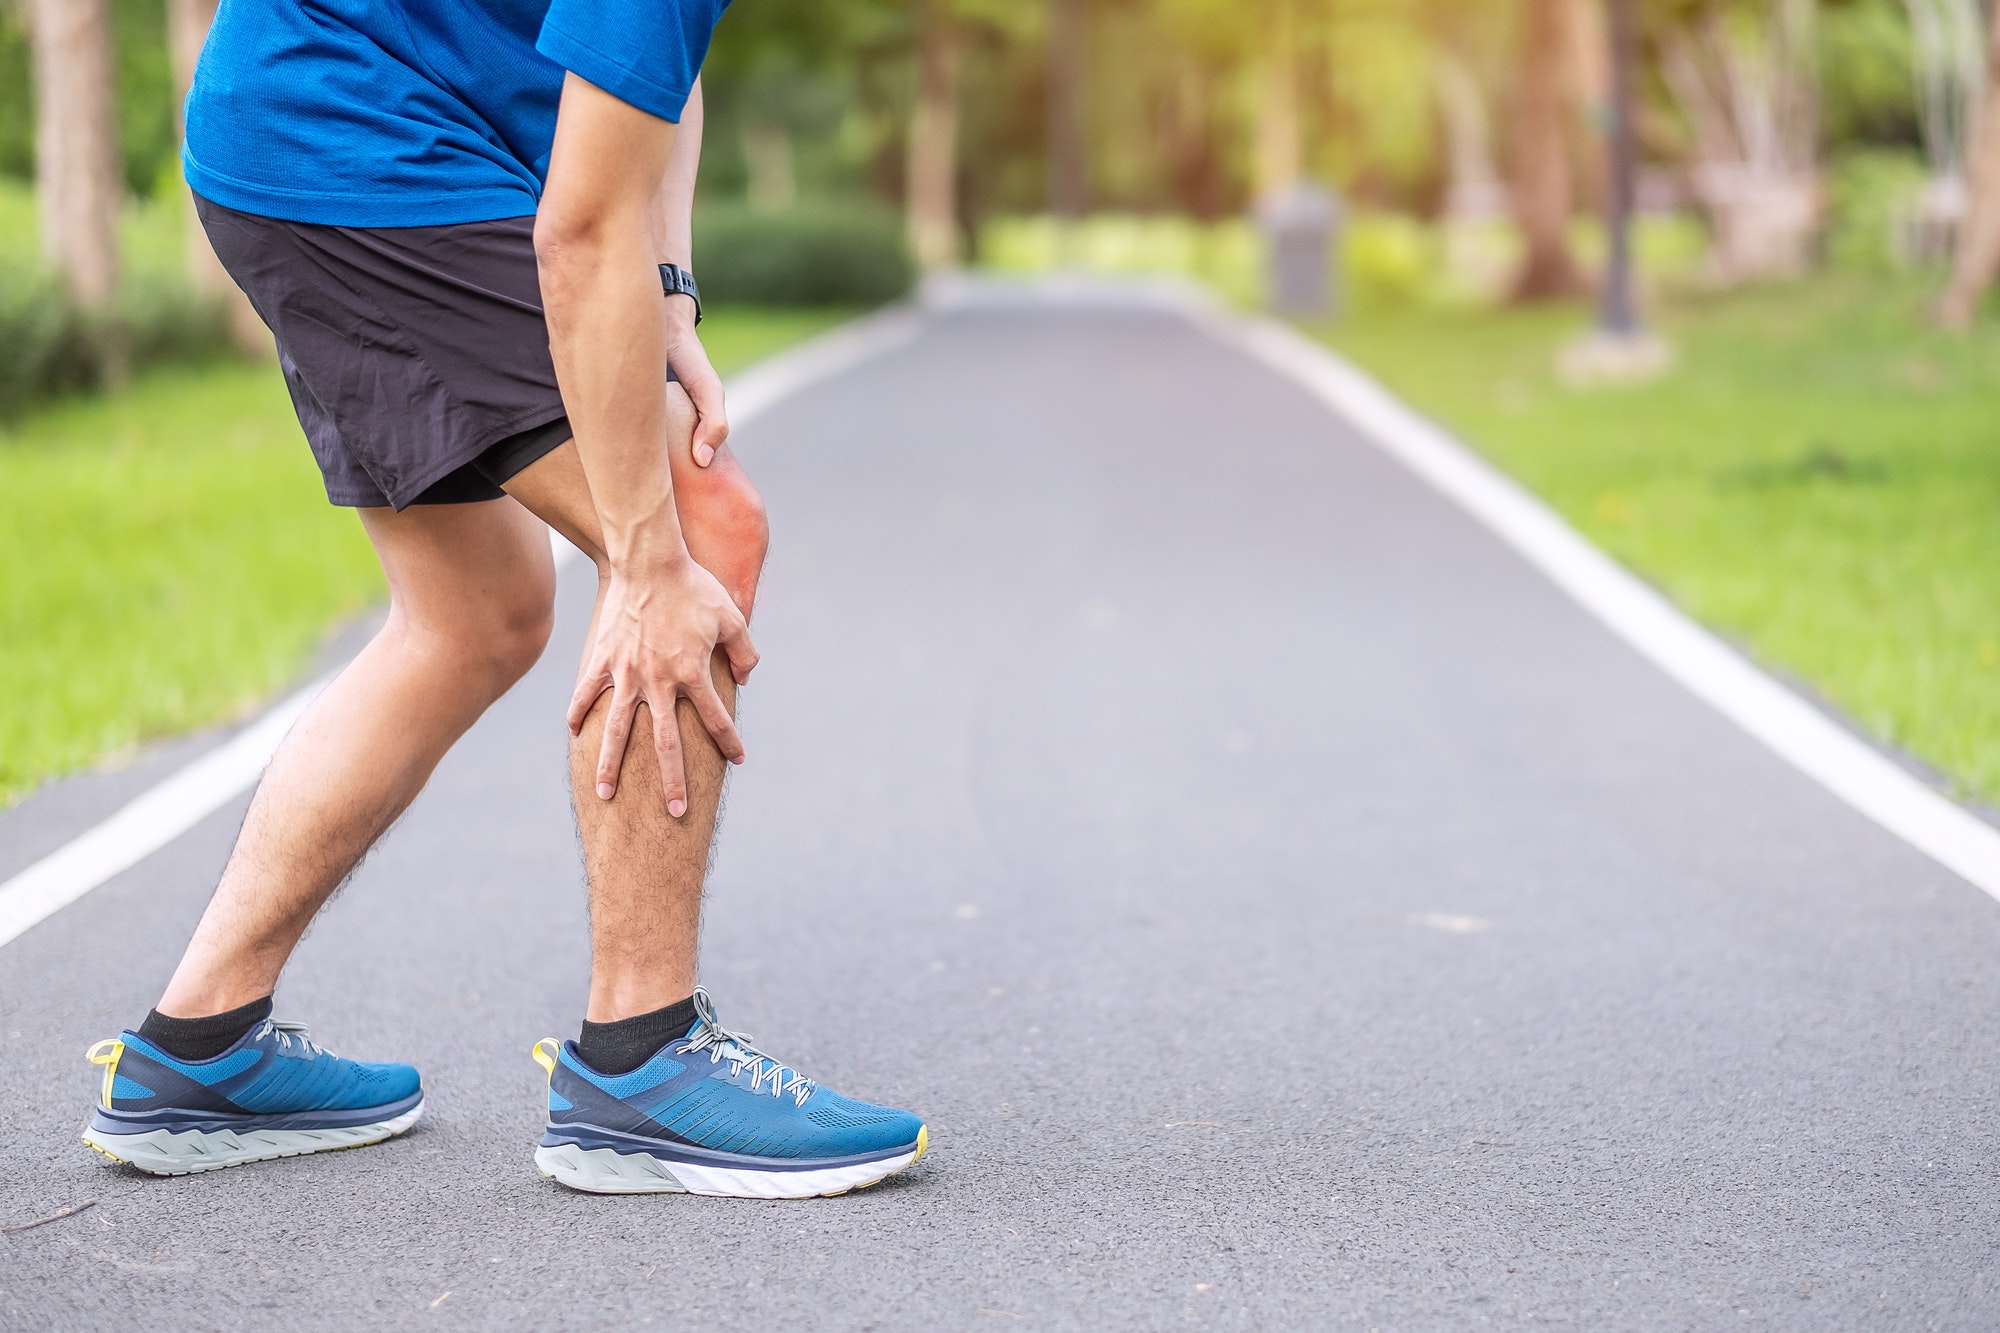 inner knee pain while running